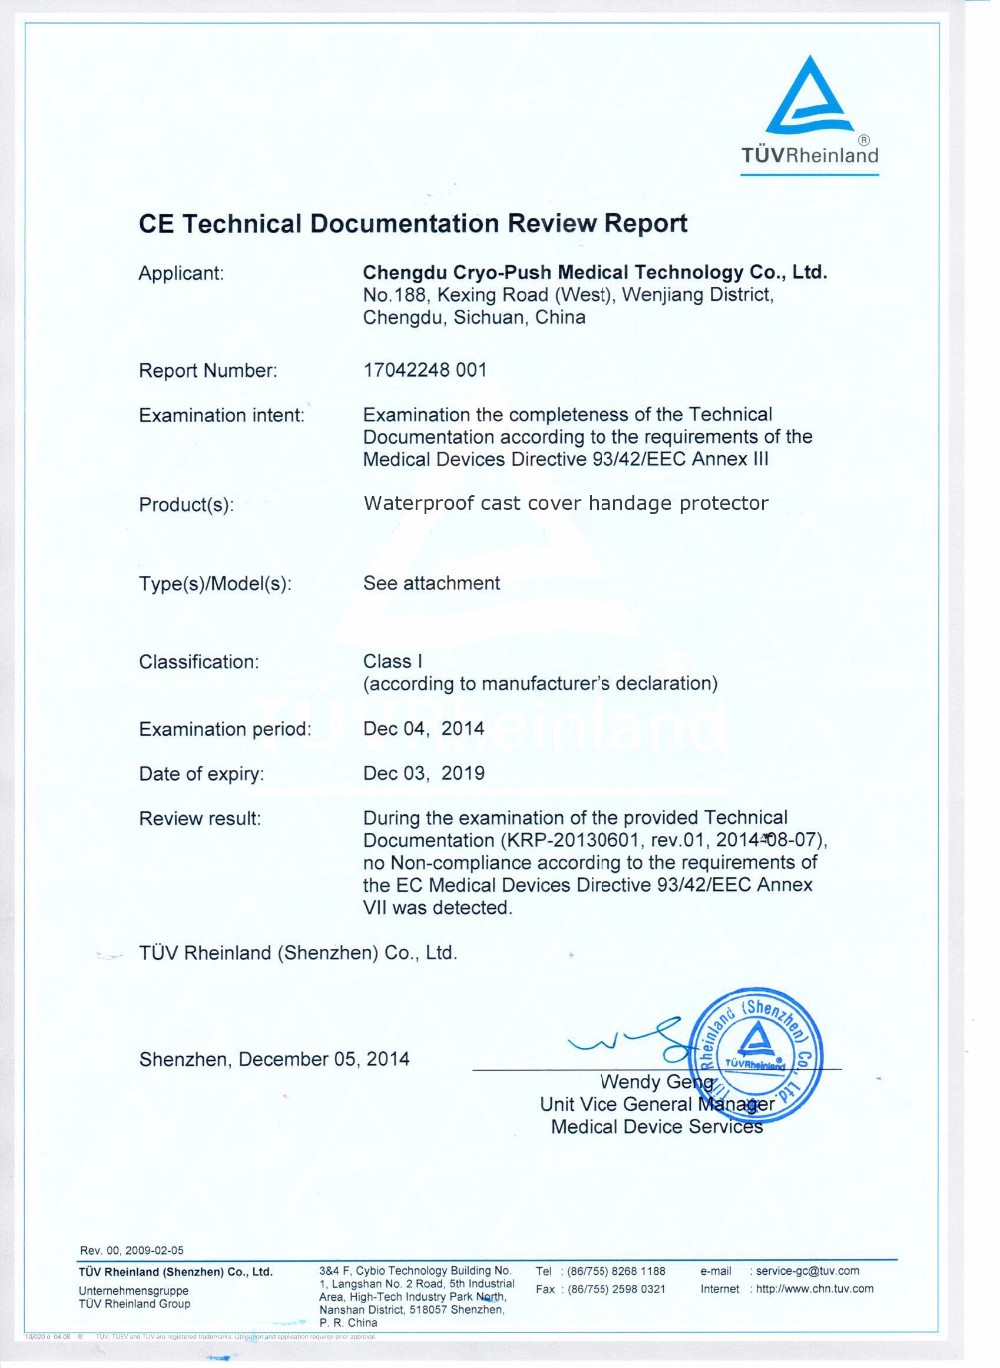 CE Certificate of cast cover